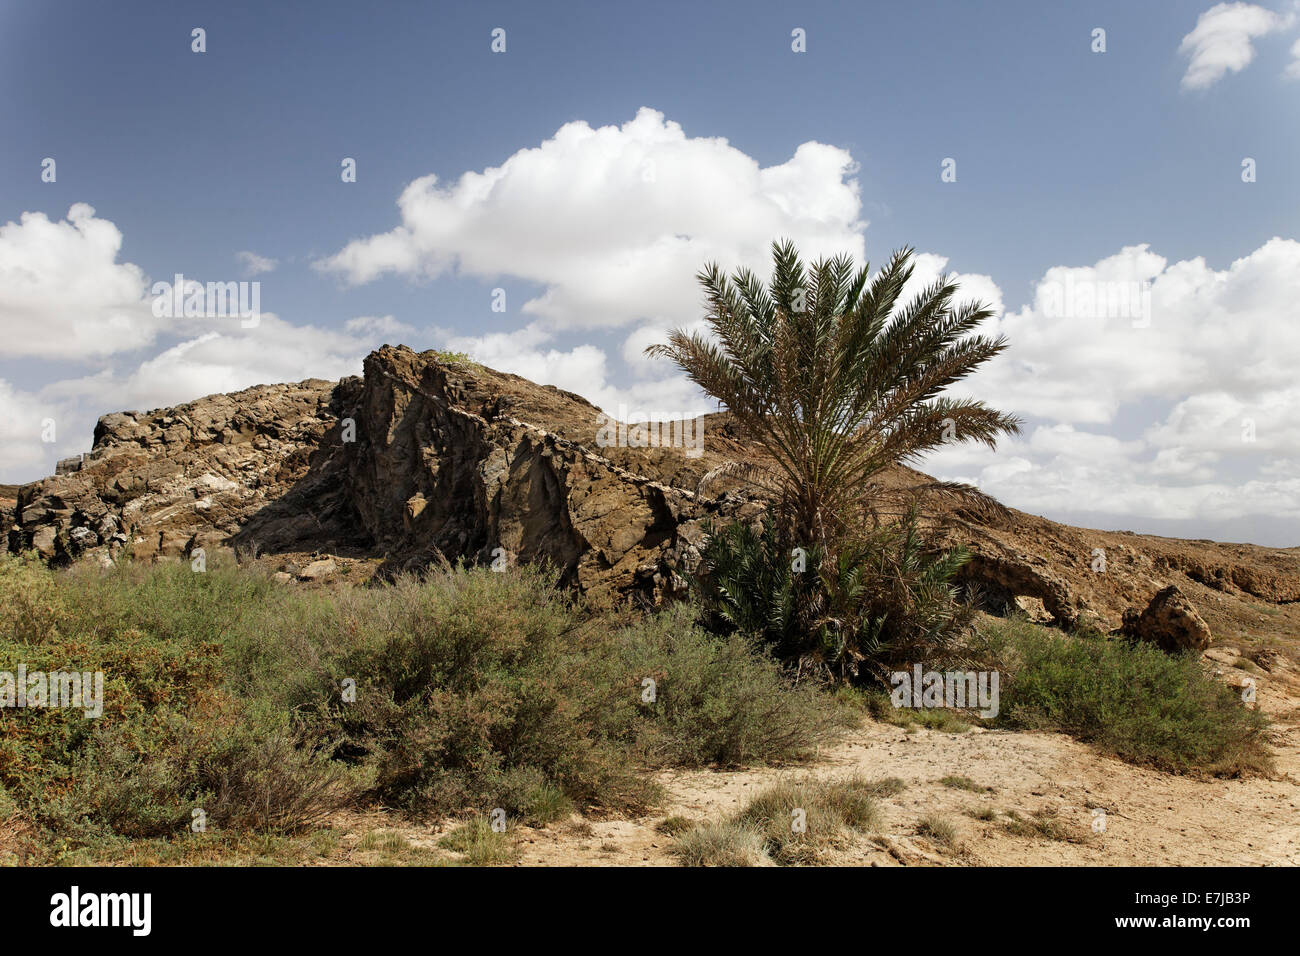 Raised ground due to plate movement, Date Palm (Phoenix dactylifera), shrubs, landscape near Mirbat, Dhofar region Stock Photo